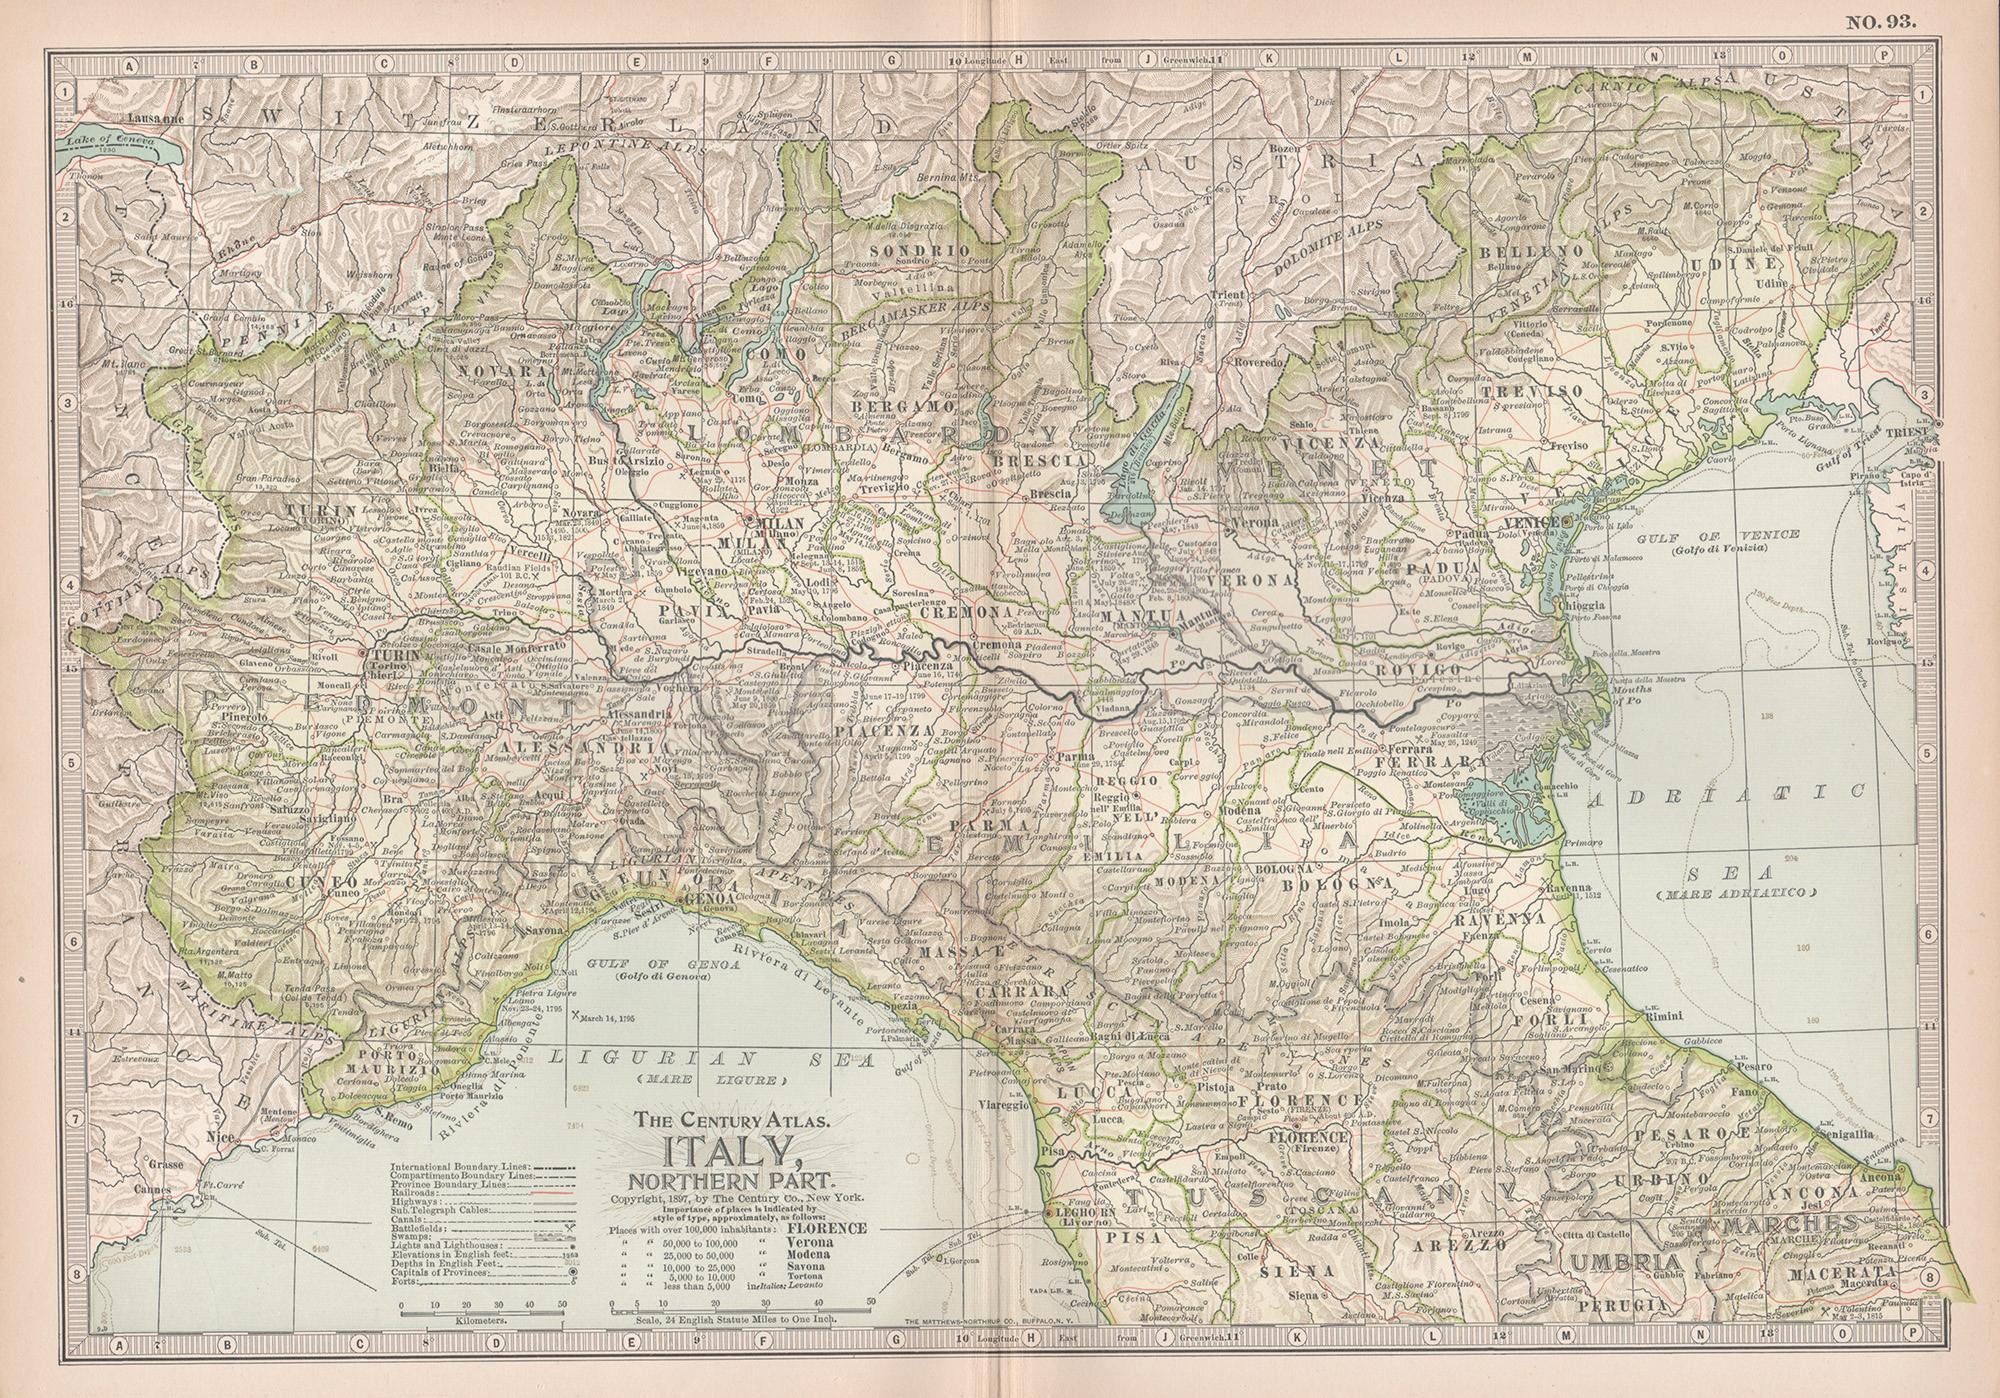 Unknown Print - Italy, Northern Part. Century Atlas antique vintage map